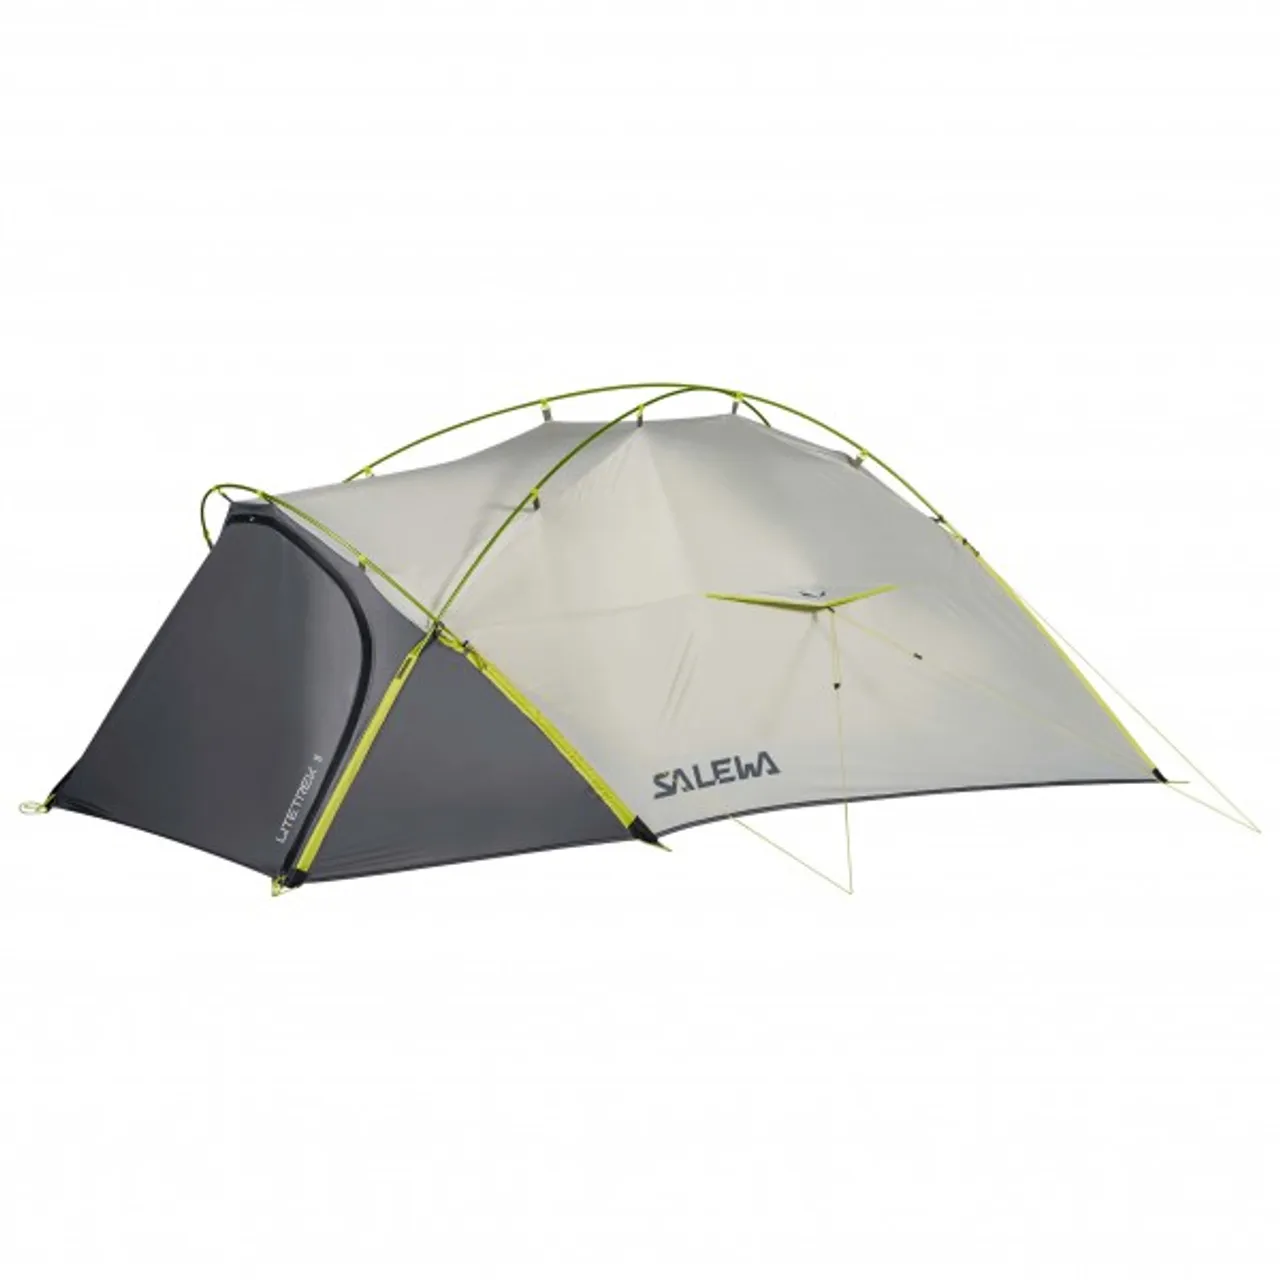 Salewa - Litetrek II Tent - 2-person tent size One Size, grey